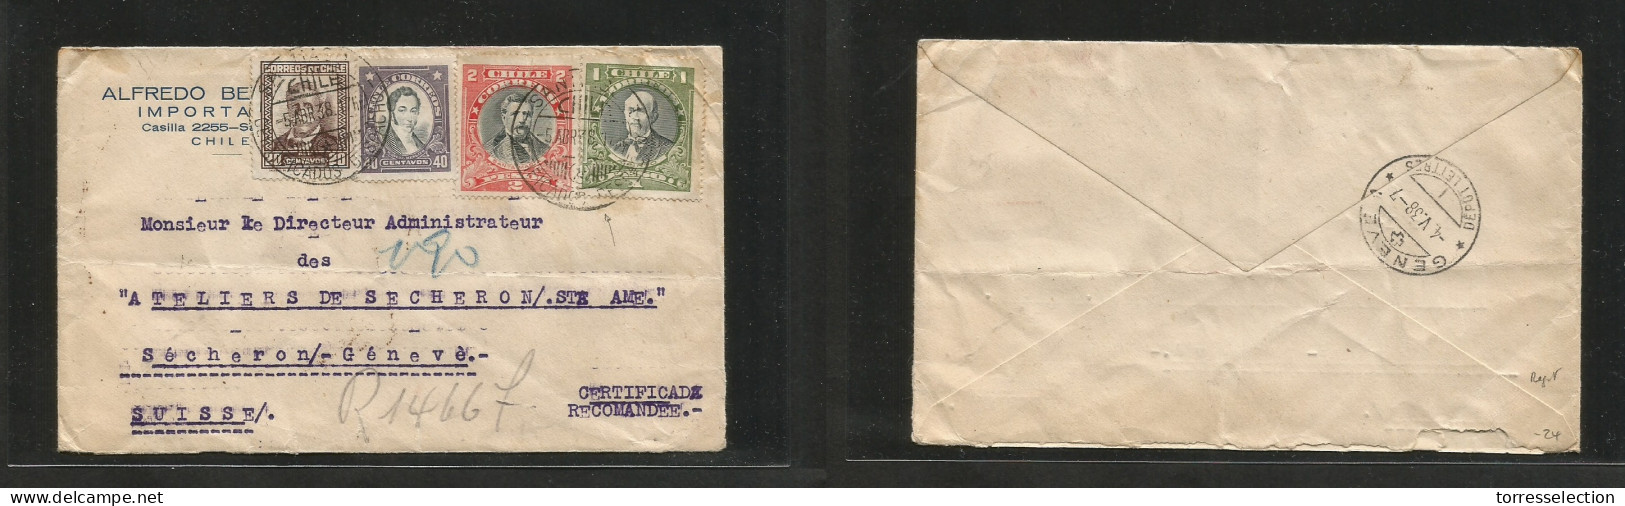 Chile - XX. 1938 (5 Apr) Santiago - Switzerland, Geneve (4 May) Registered Multifkd Env. 3,60 Peso Rate. SALE. - Cile